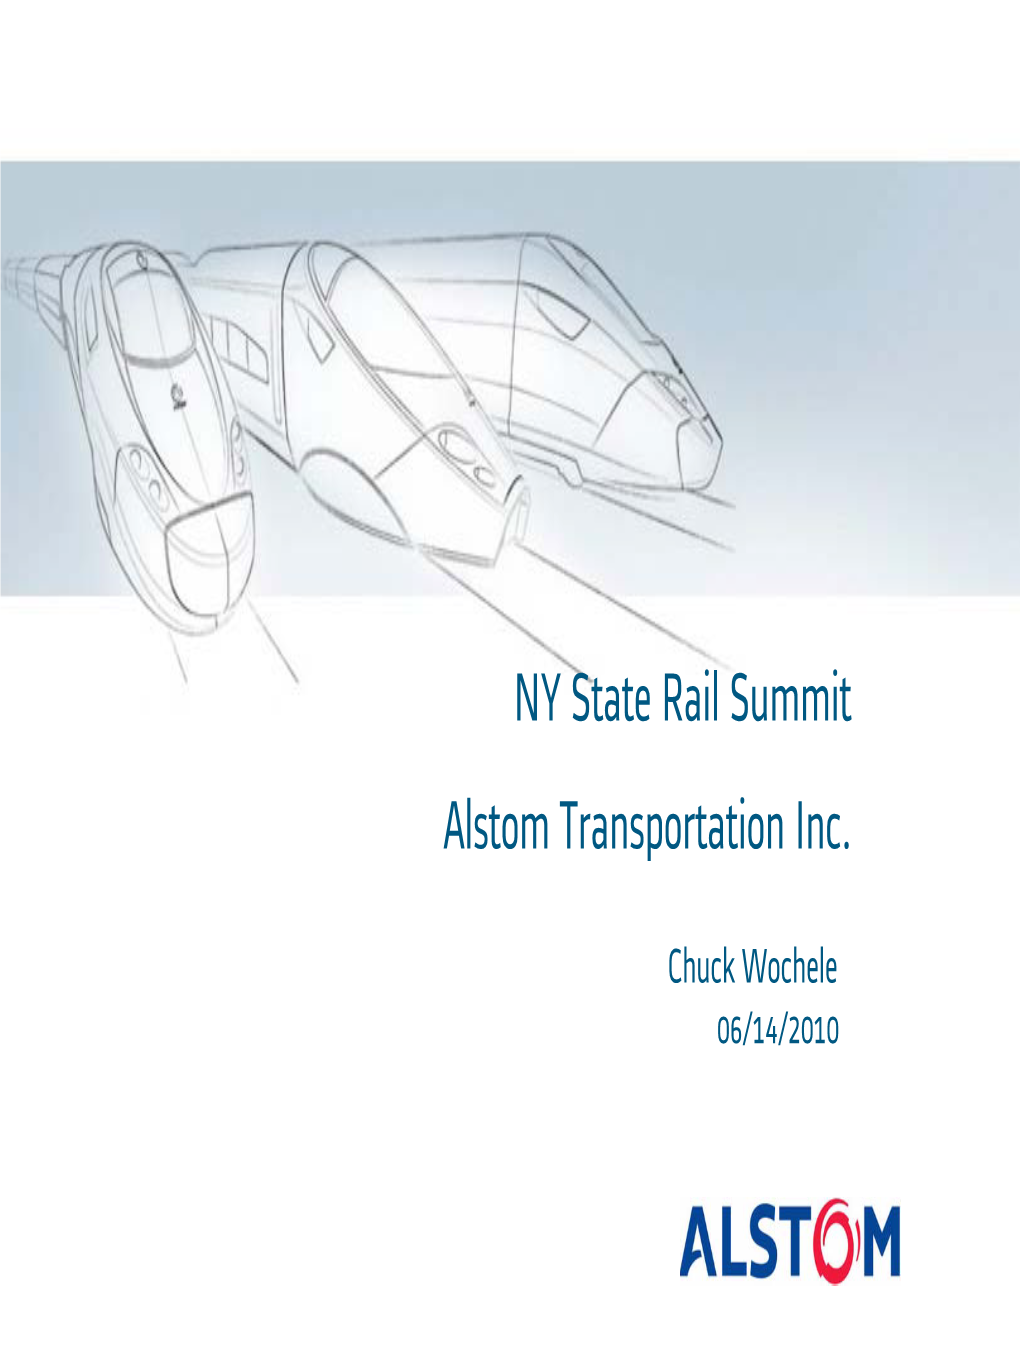 NY State Rail Summit Alstom Transportation Inc